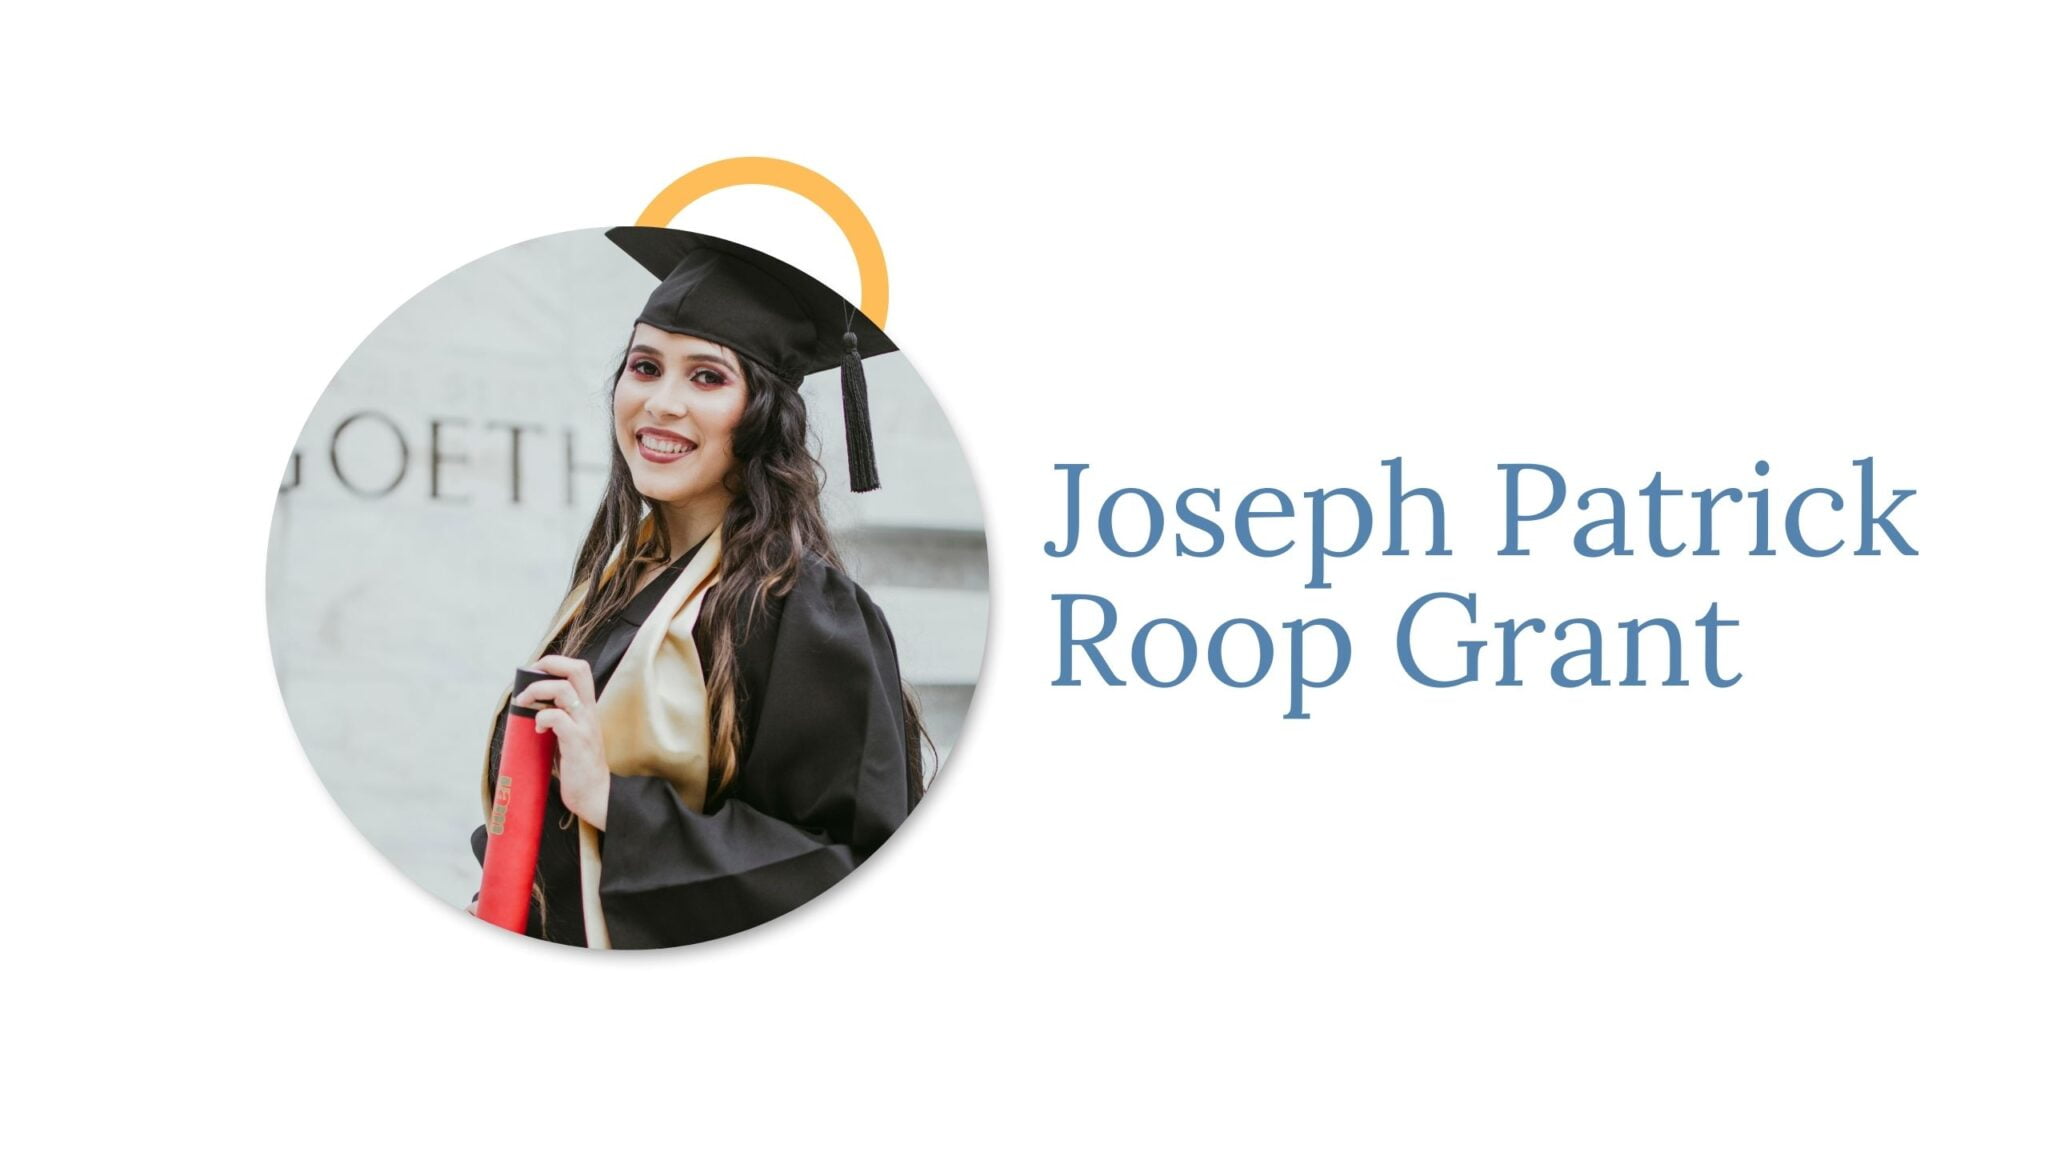 Joseph Patrick Roop Grant